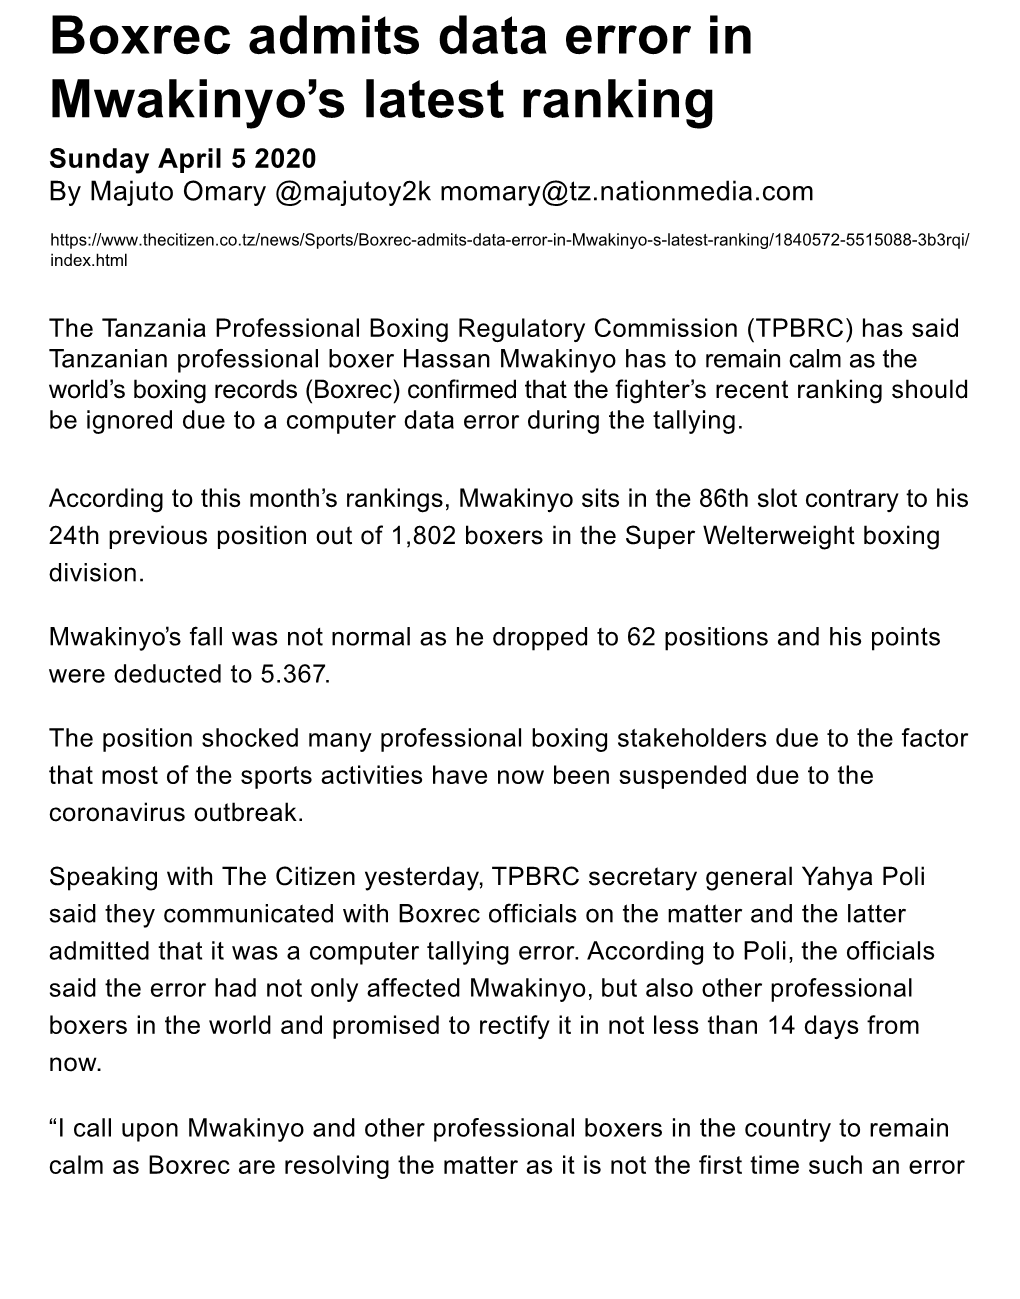 Boxrec Admits Data Error in Mwakinyoʼs Latest Ranking